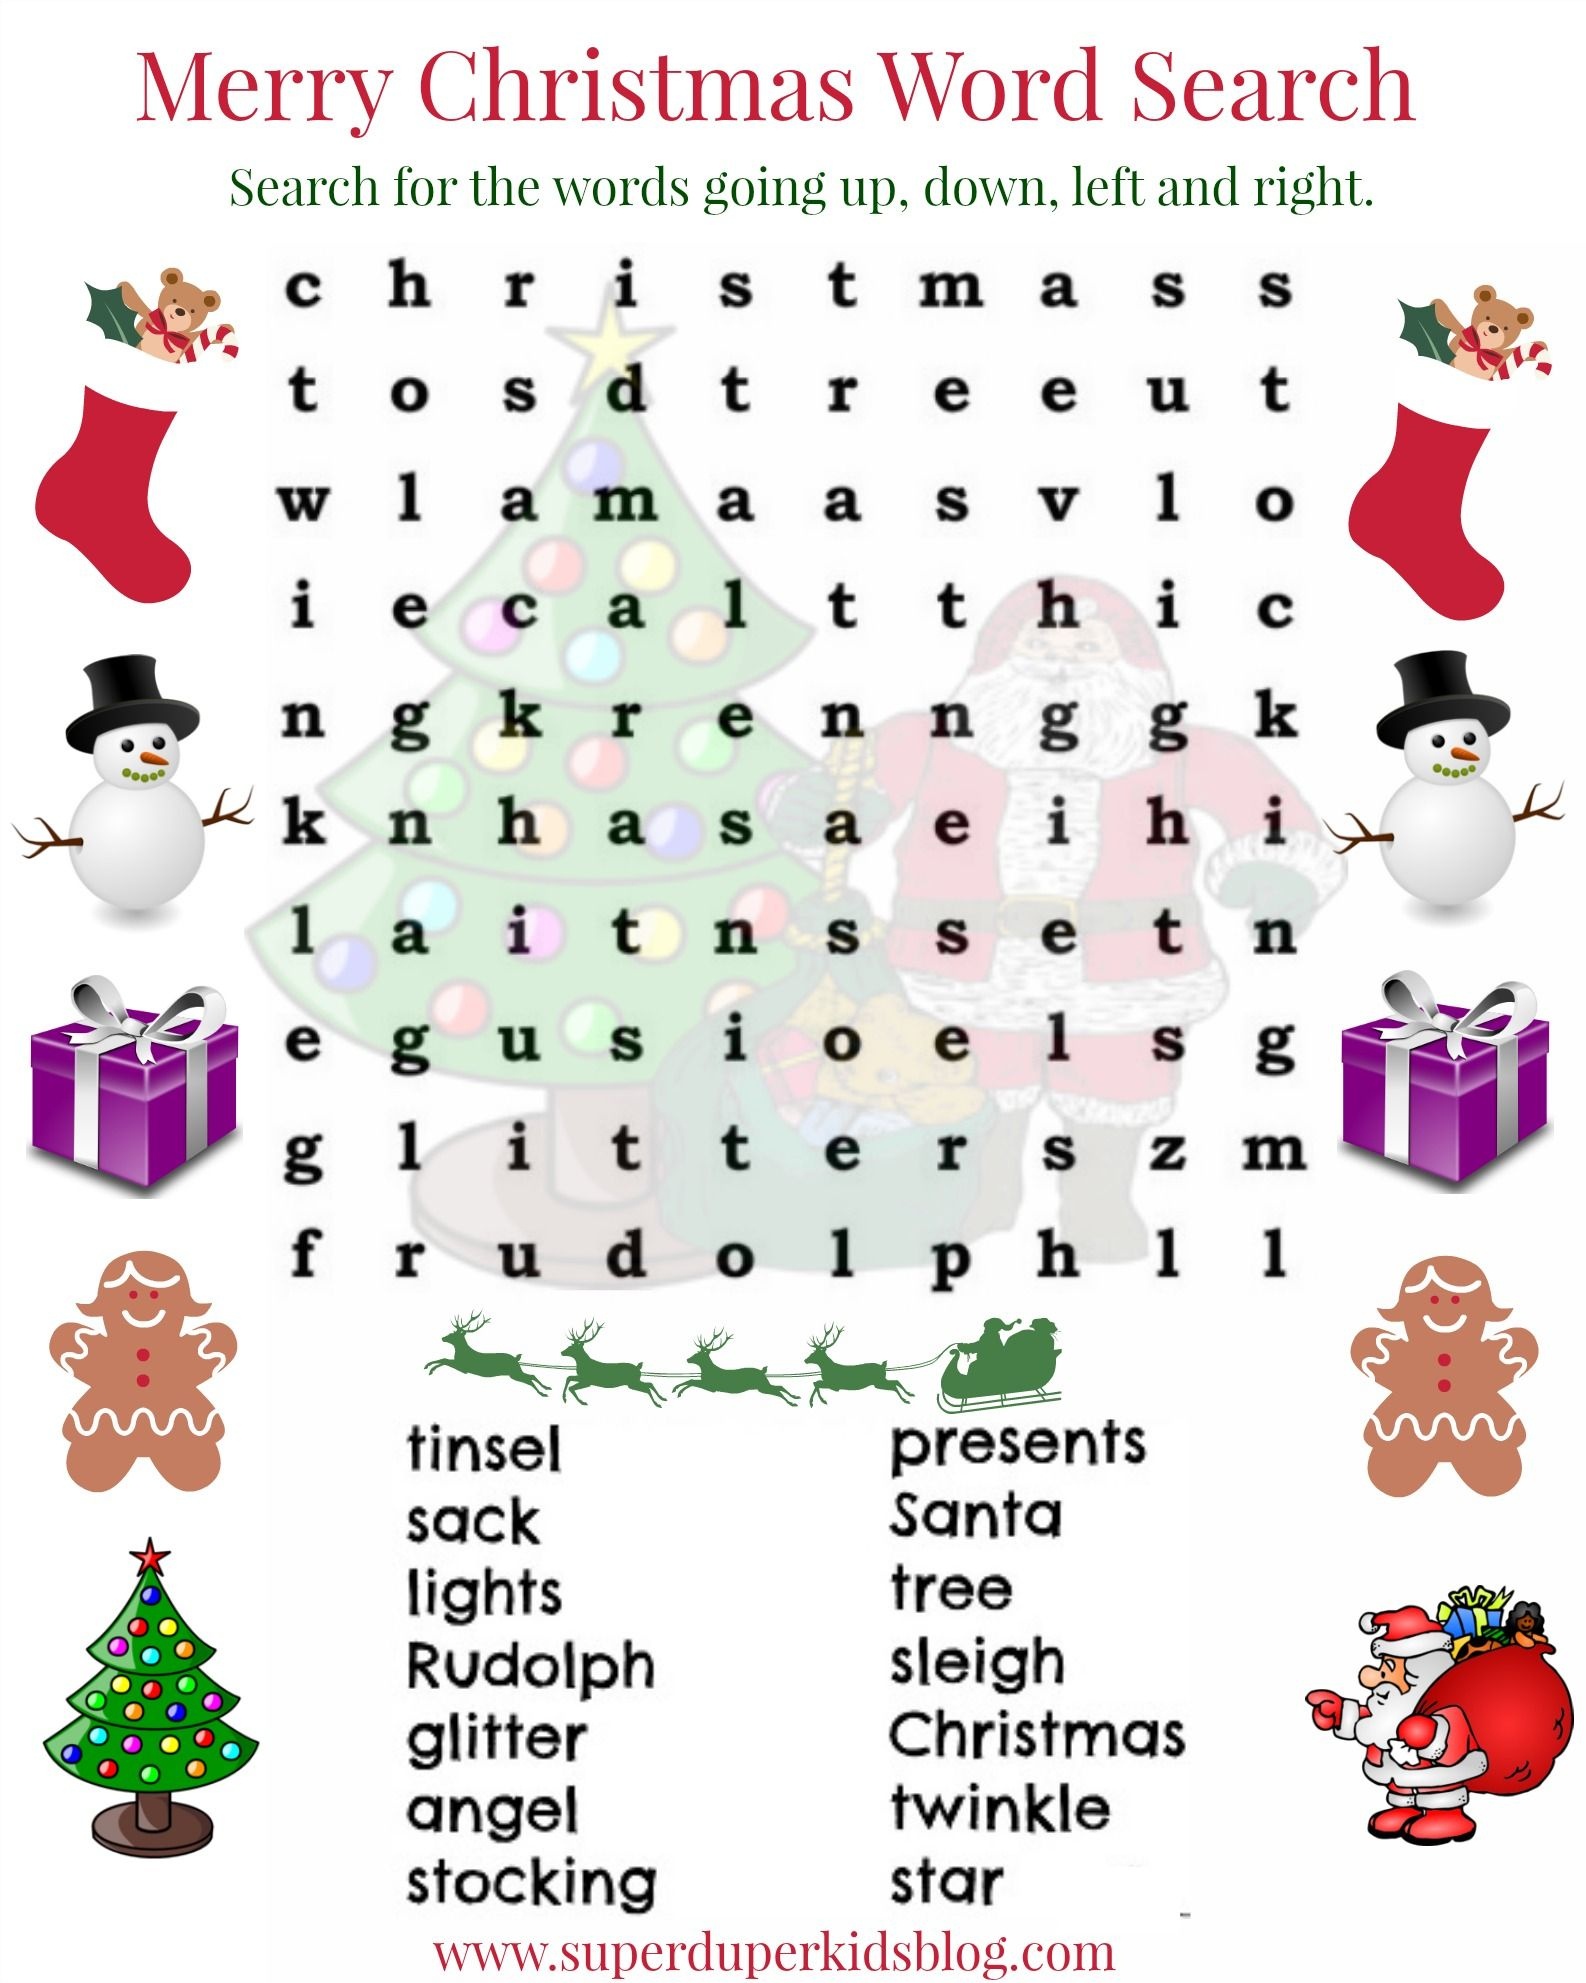 Pinsuperduperkidsblog On Free Printables | Christmas Word Search - Free Printable Christmas Word Search